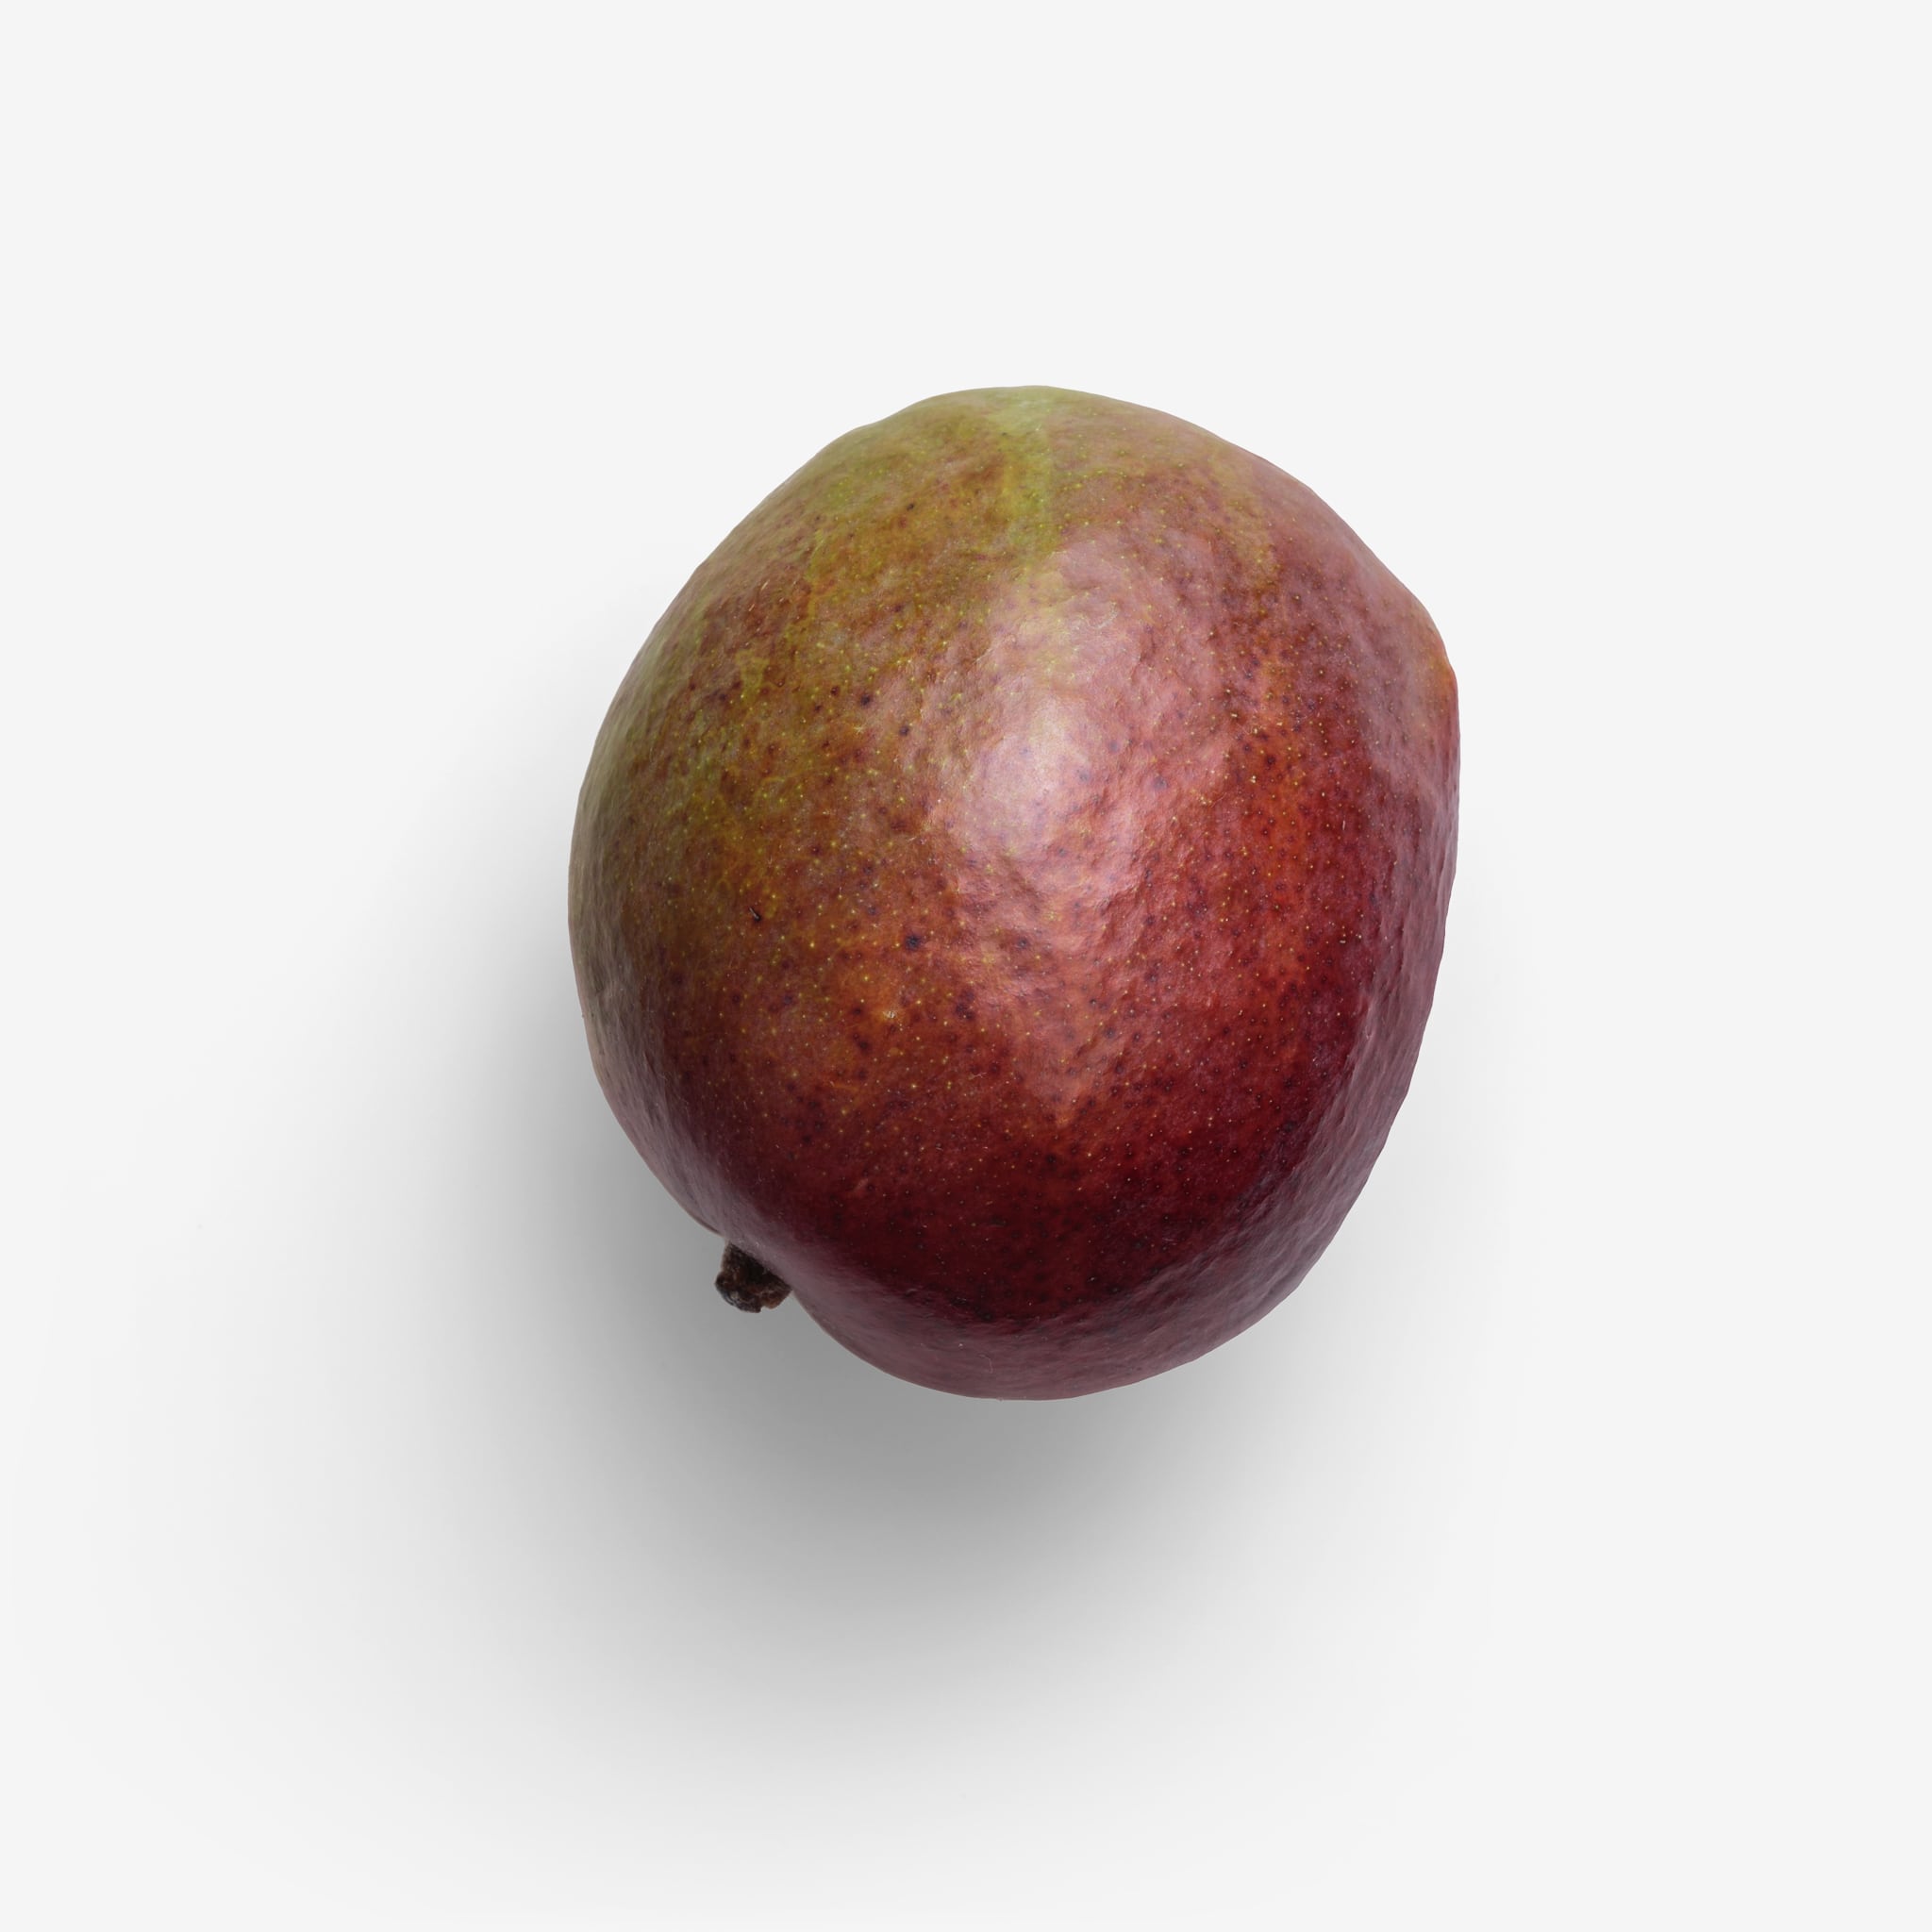 Mango image asset with transparent background